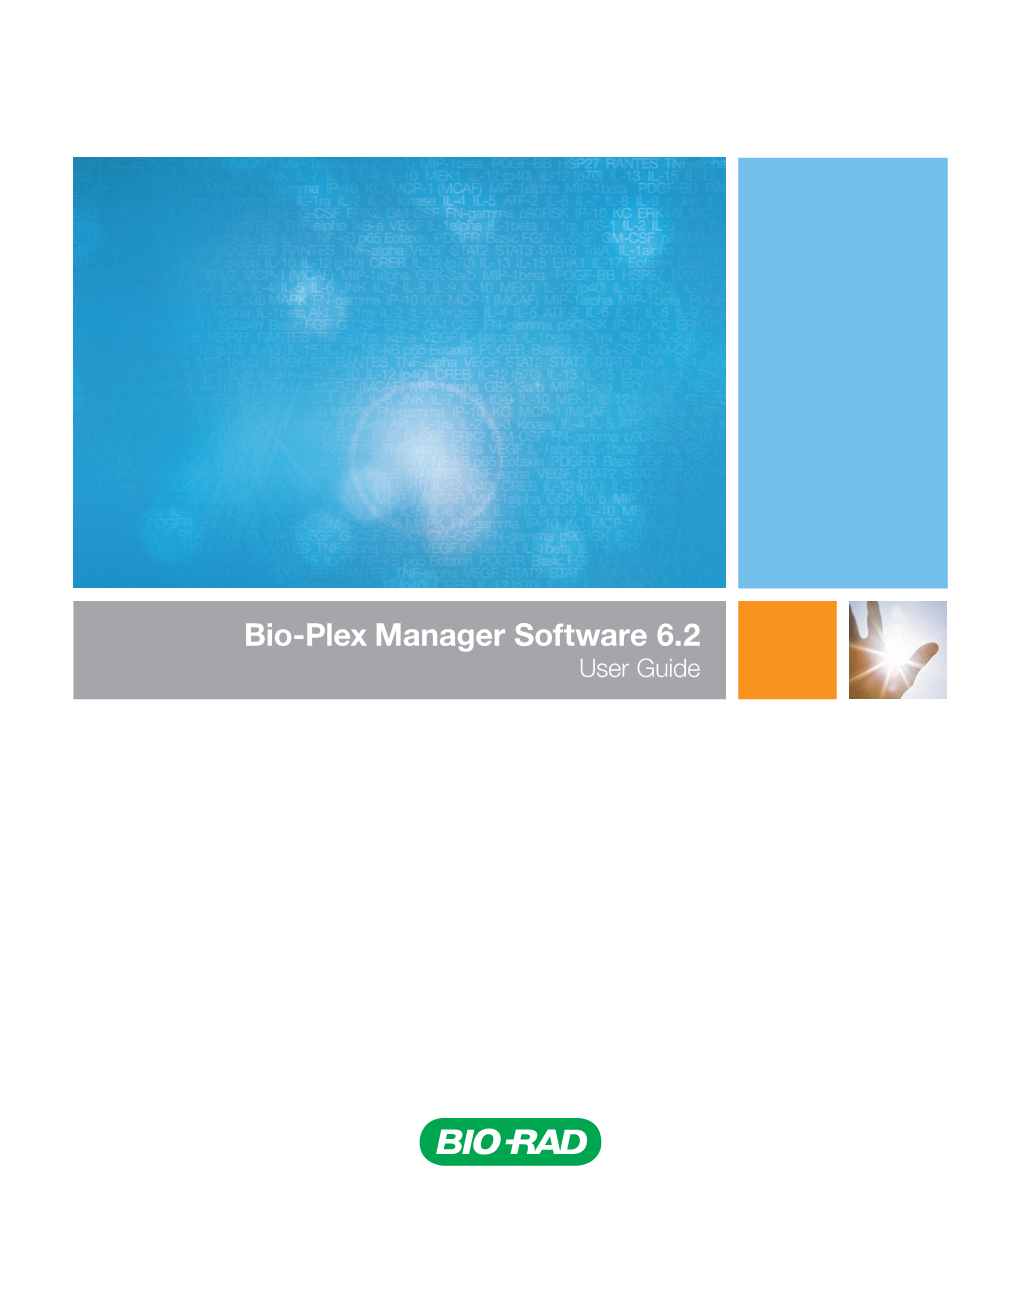 Bio-Plex Manager Software 6.2 User Guide